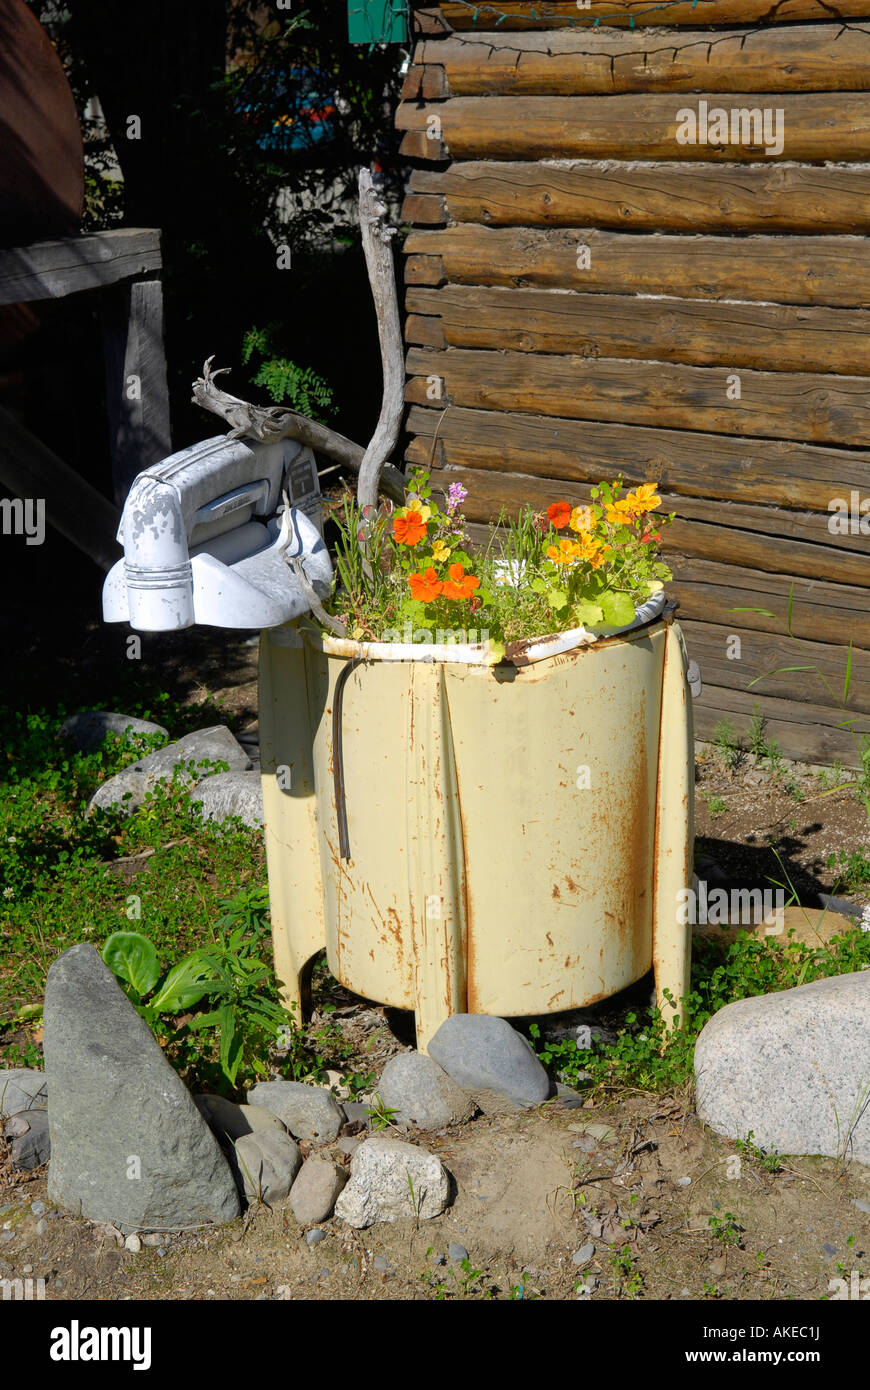 Antique Washing Machine Filled with Flowers Town of Talkeetna Alaska AK Northern Exposure near Denali National Park Mt McKinley Stock Photo